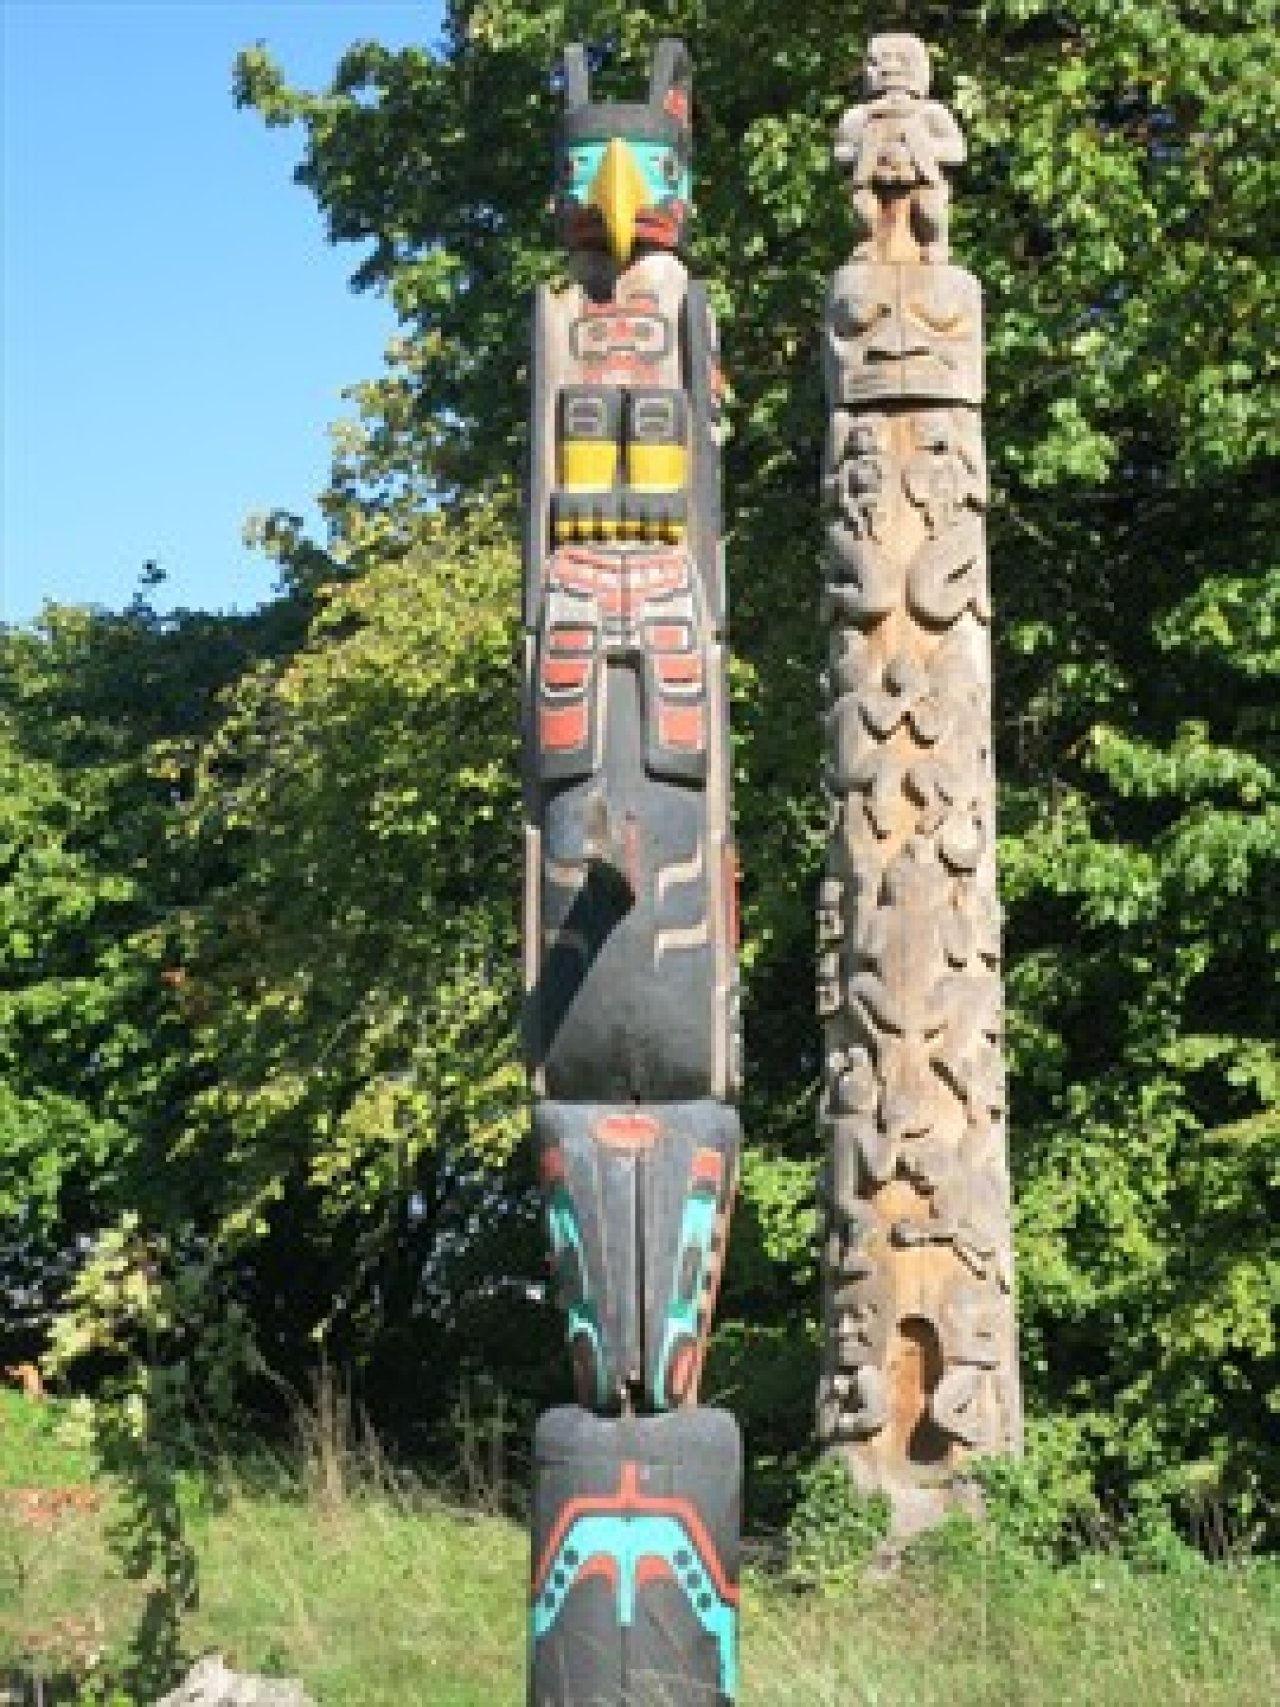 Oscar Maltipi Totem Pole
Source: http://stanleyparkvan.com/stanley-park-van-attractions-totem-poles.html